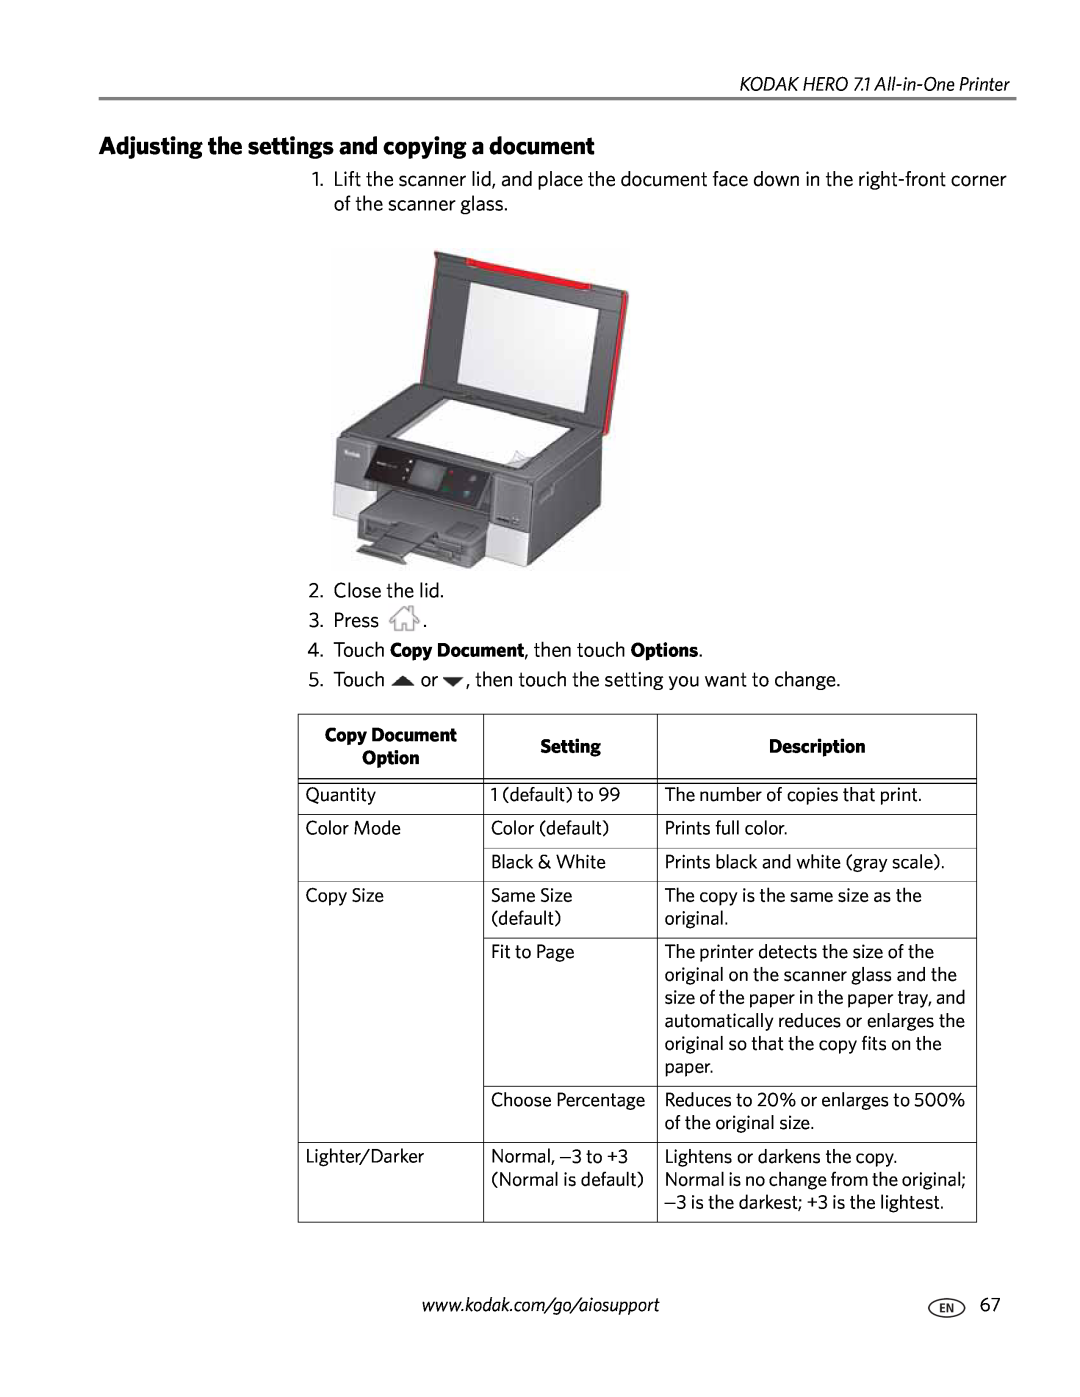 Kodak Adjusting the settings and copying a document, KODAK HERO 7.1 All-in-One Printer, Copy Document, Setting, Option 